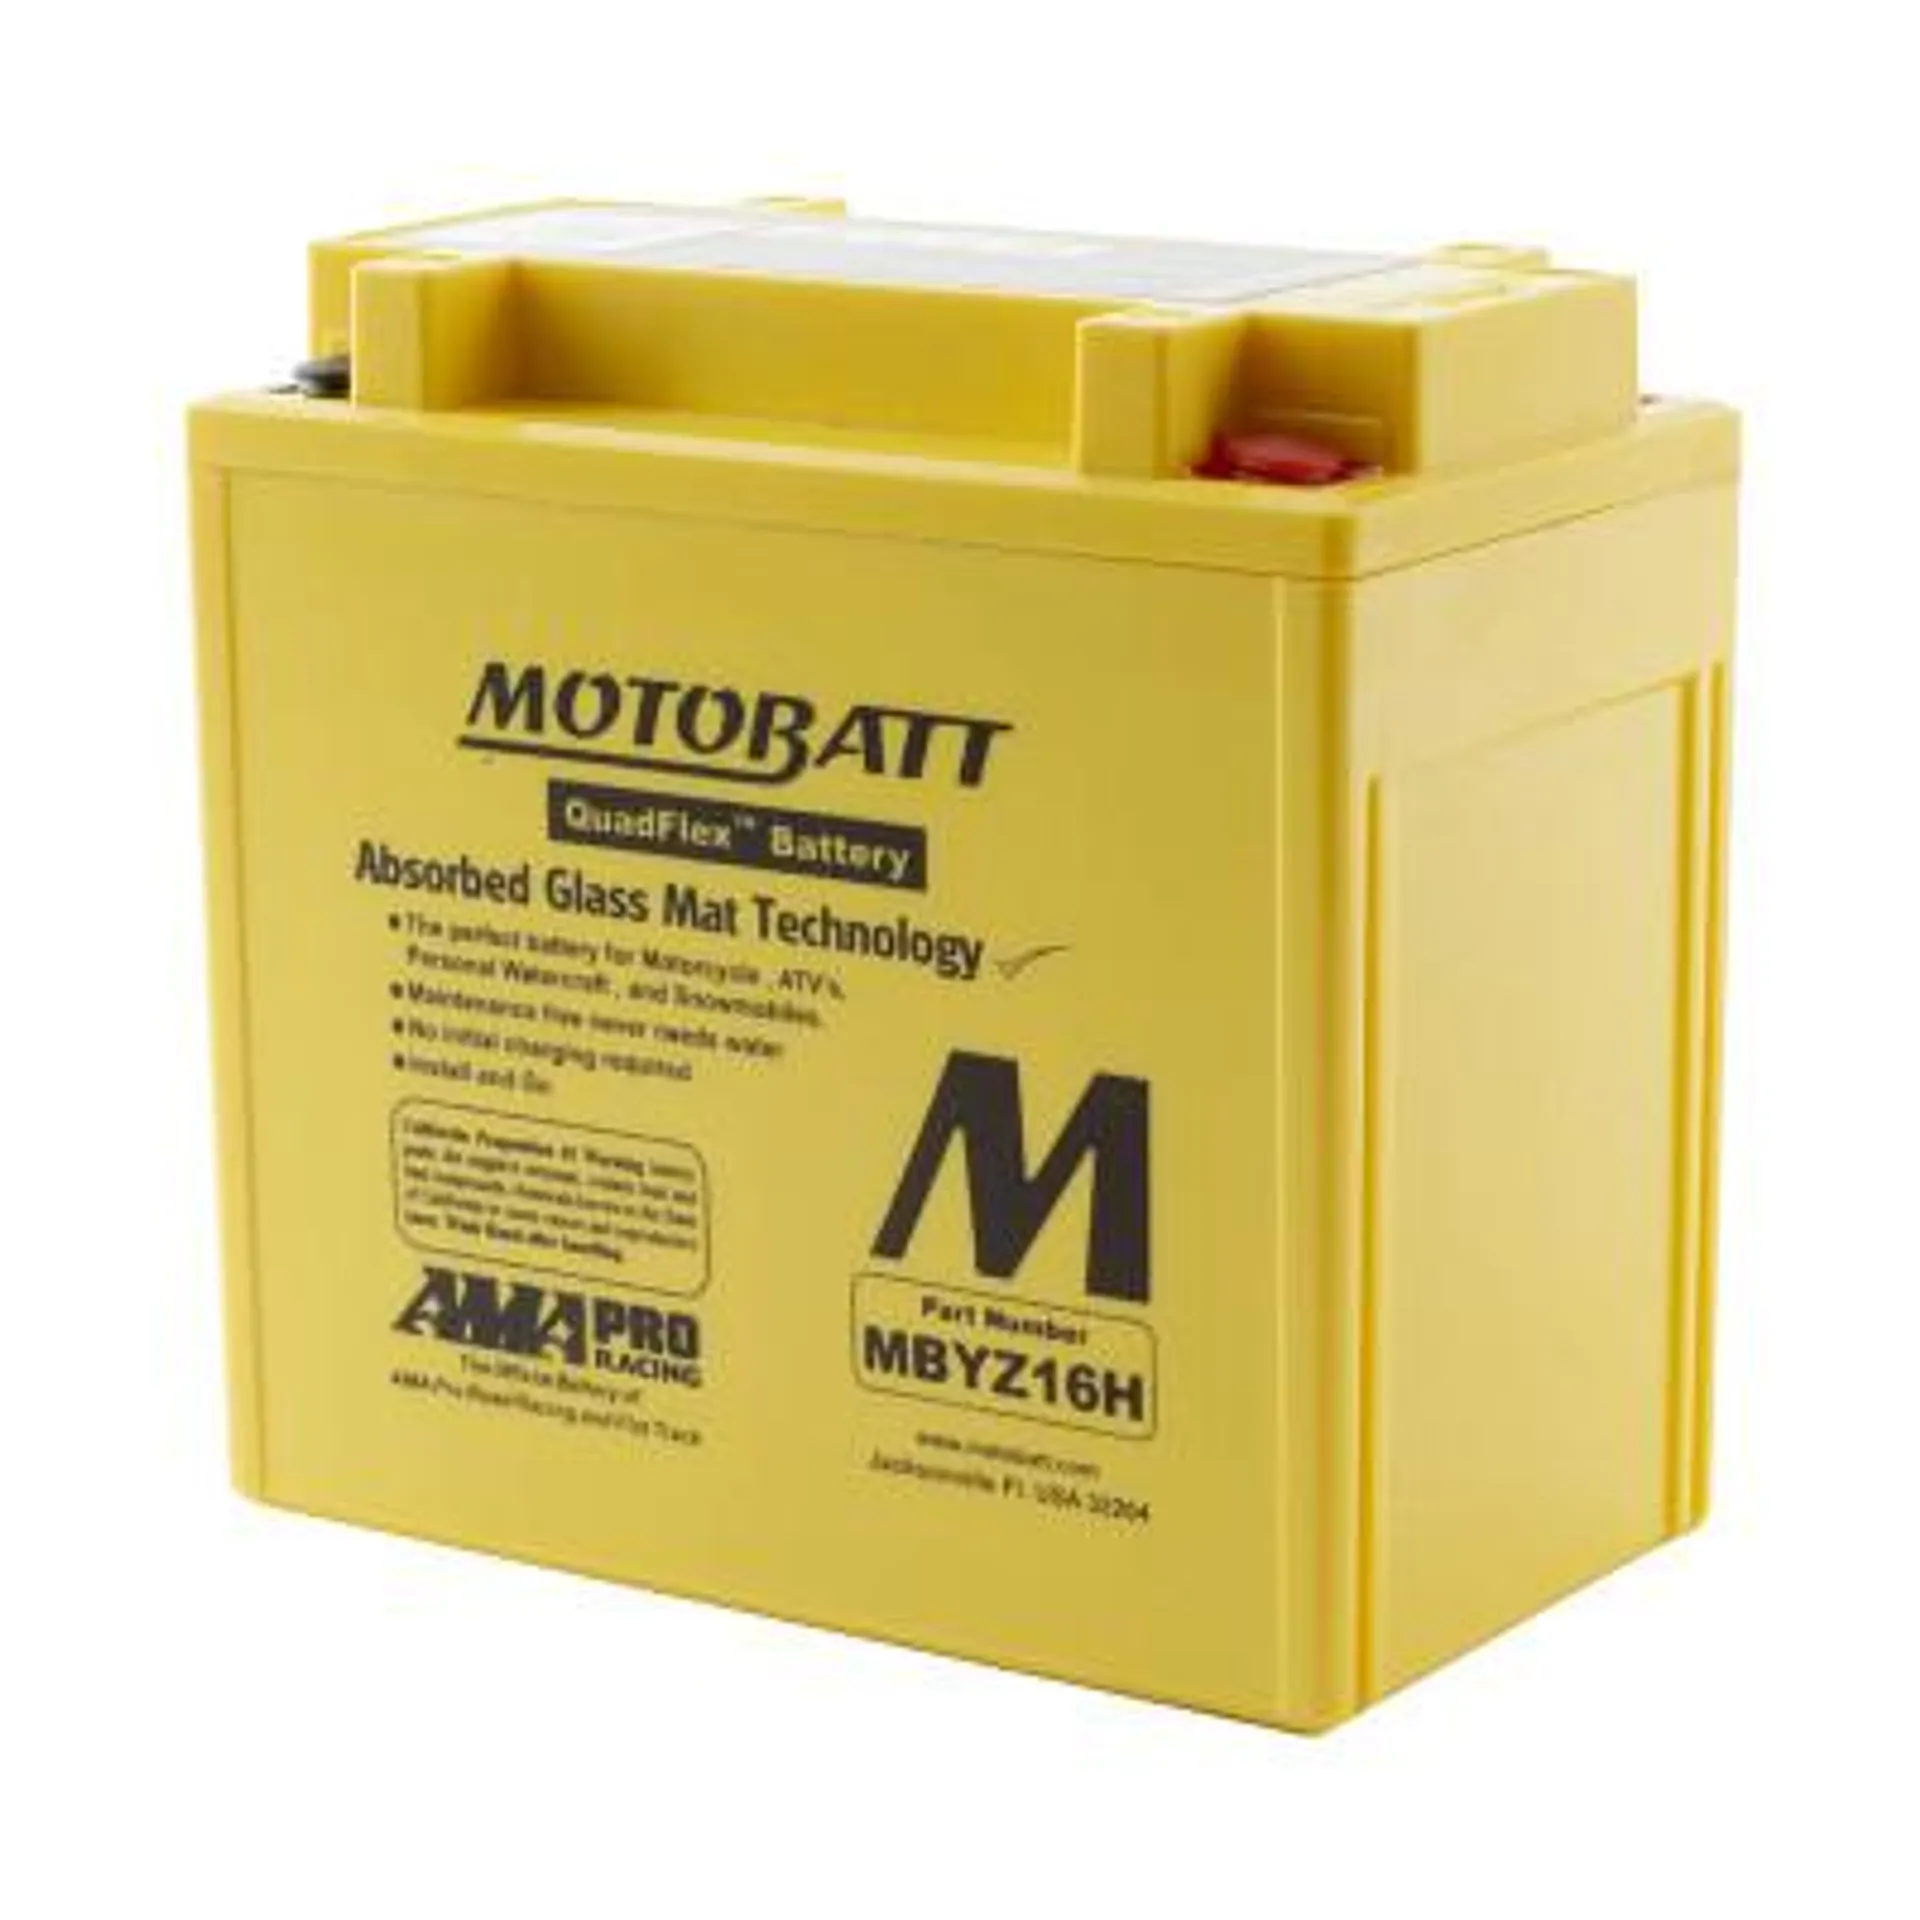 MBYZ16H 12V Motobatt Battery